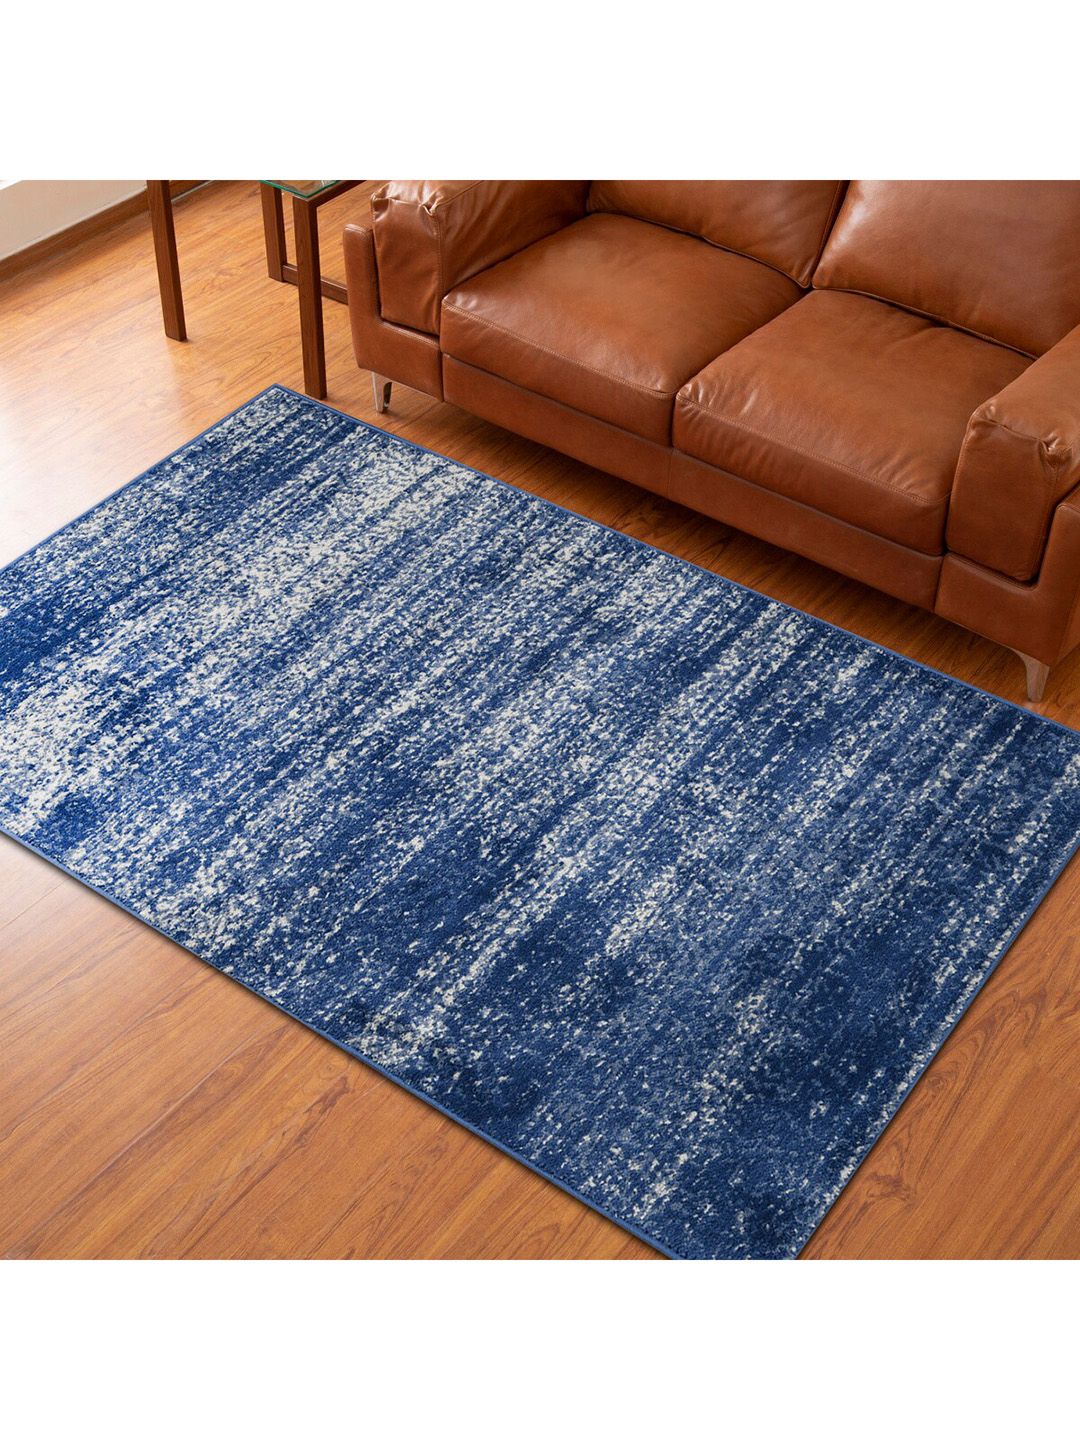 Home Centre Savanna Blue Melange Textured Polyester Carpet Price in India